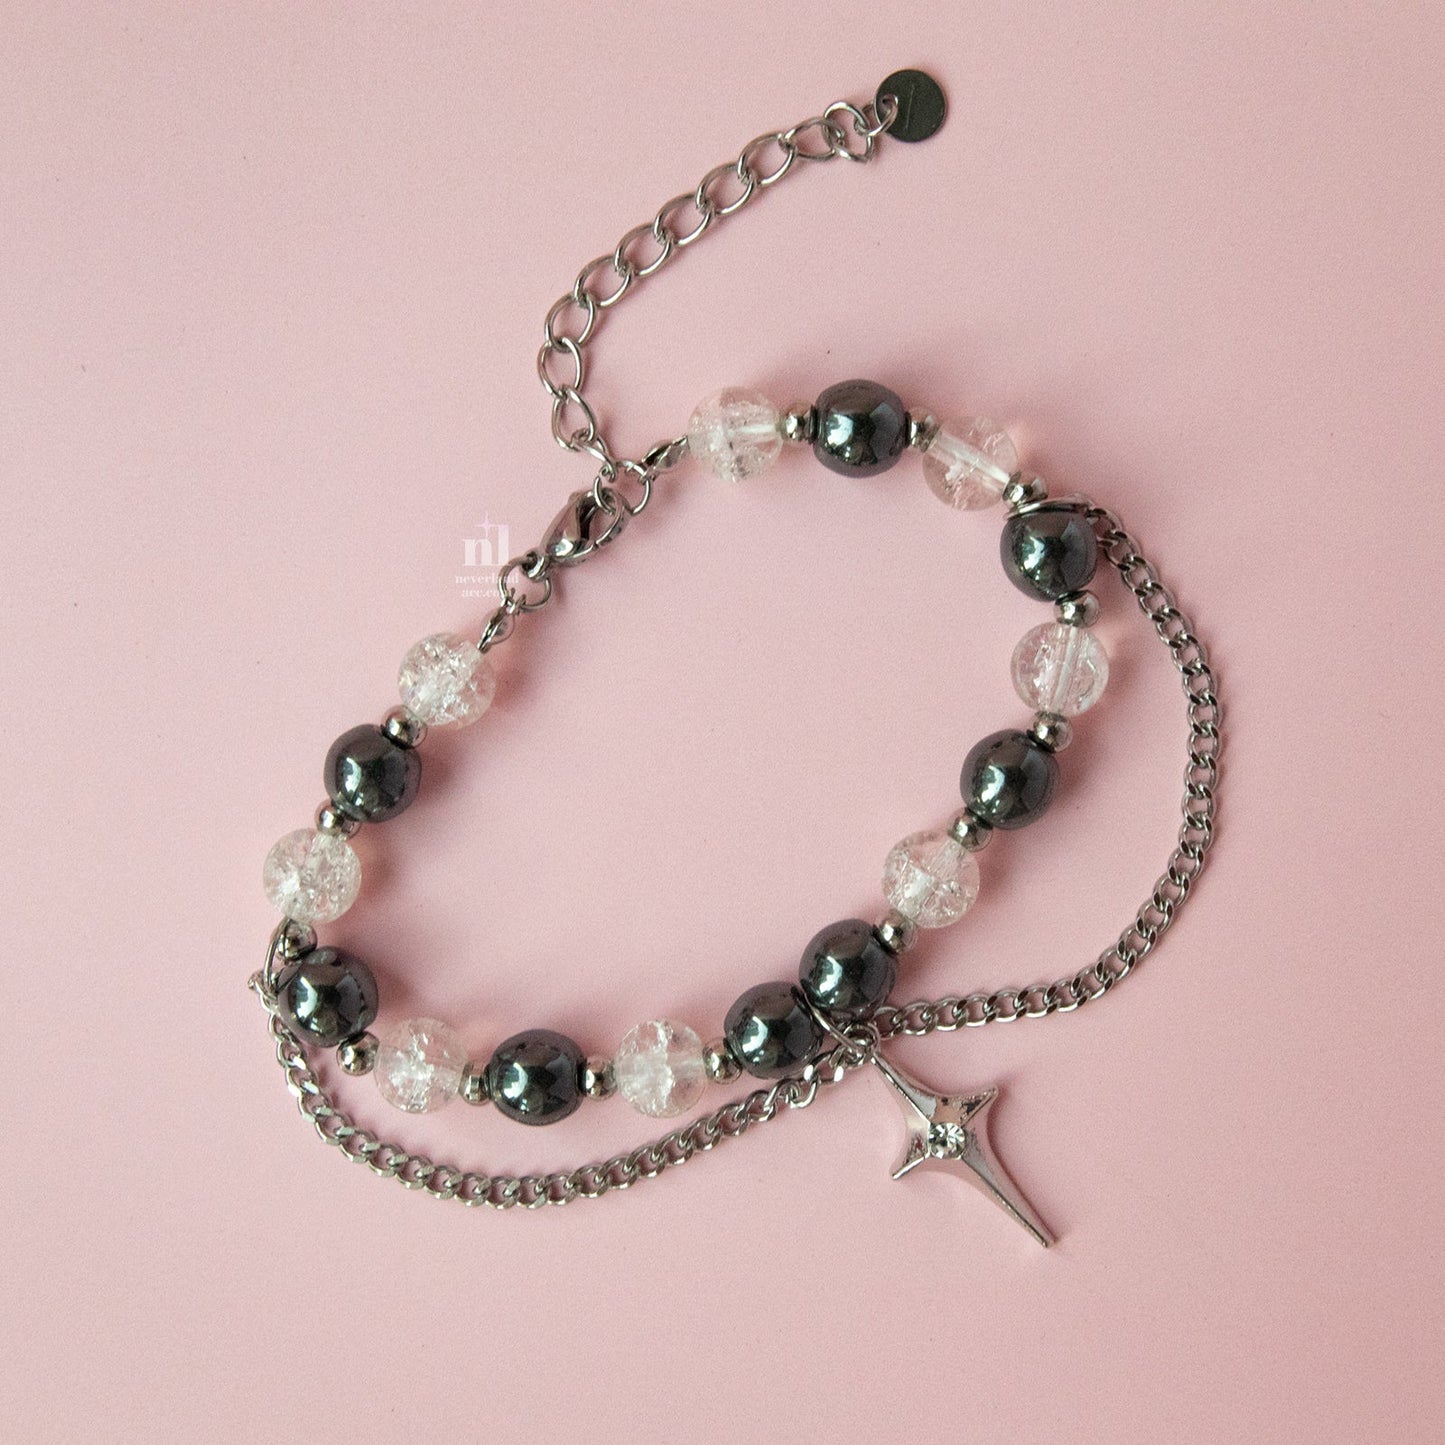 Star Pendant Hematite Charm Bracelet - neverland accessories